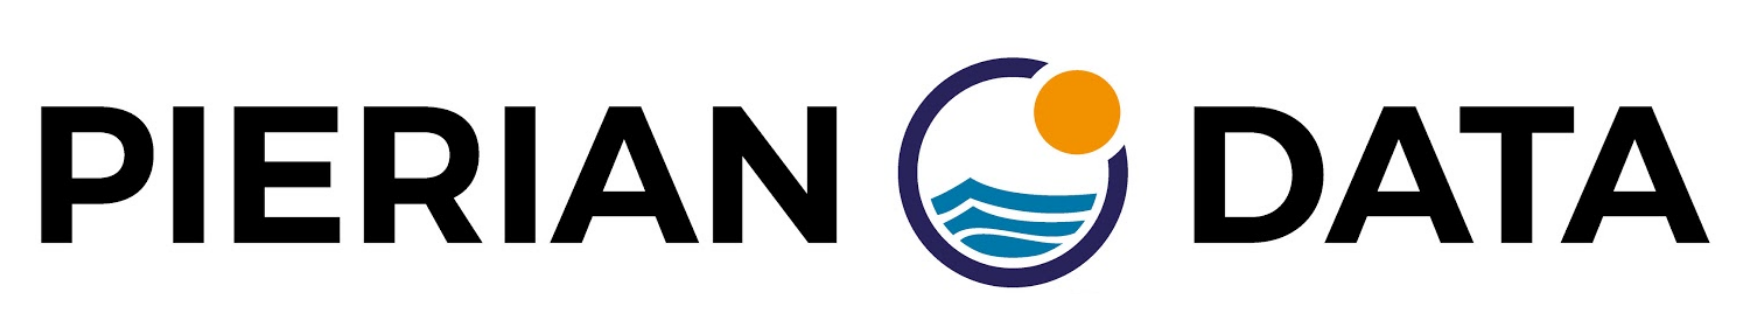 Pierian_Data_Logo.png